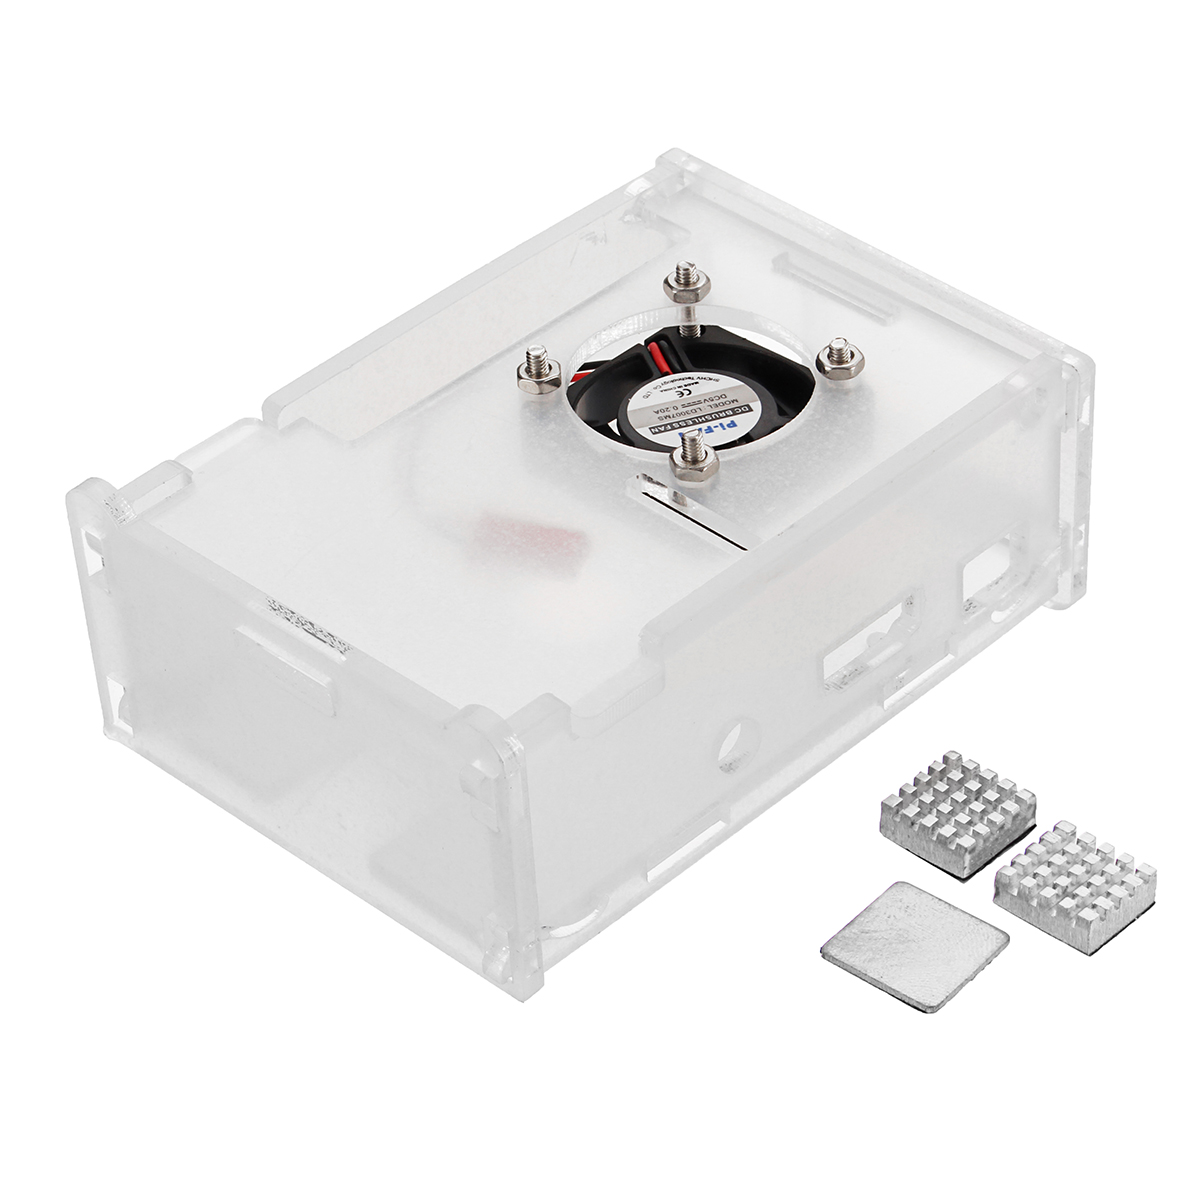 3x-Heat-Sinks--Cooling-Fan--Clear-Enclosure-Case-Box-For-Raspberry-Pi-3-Model-b-1202373